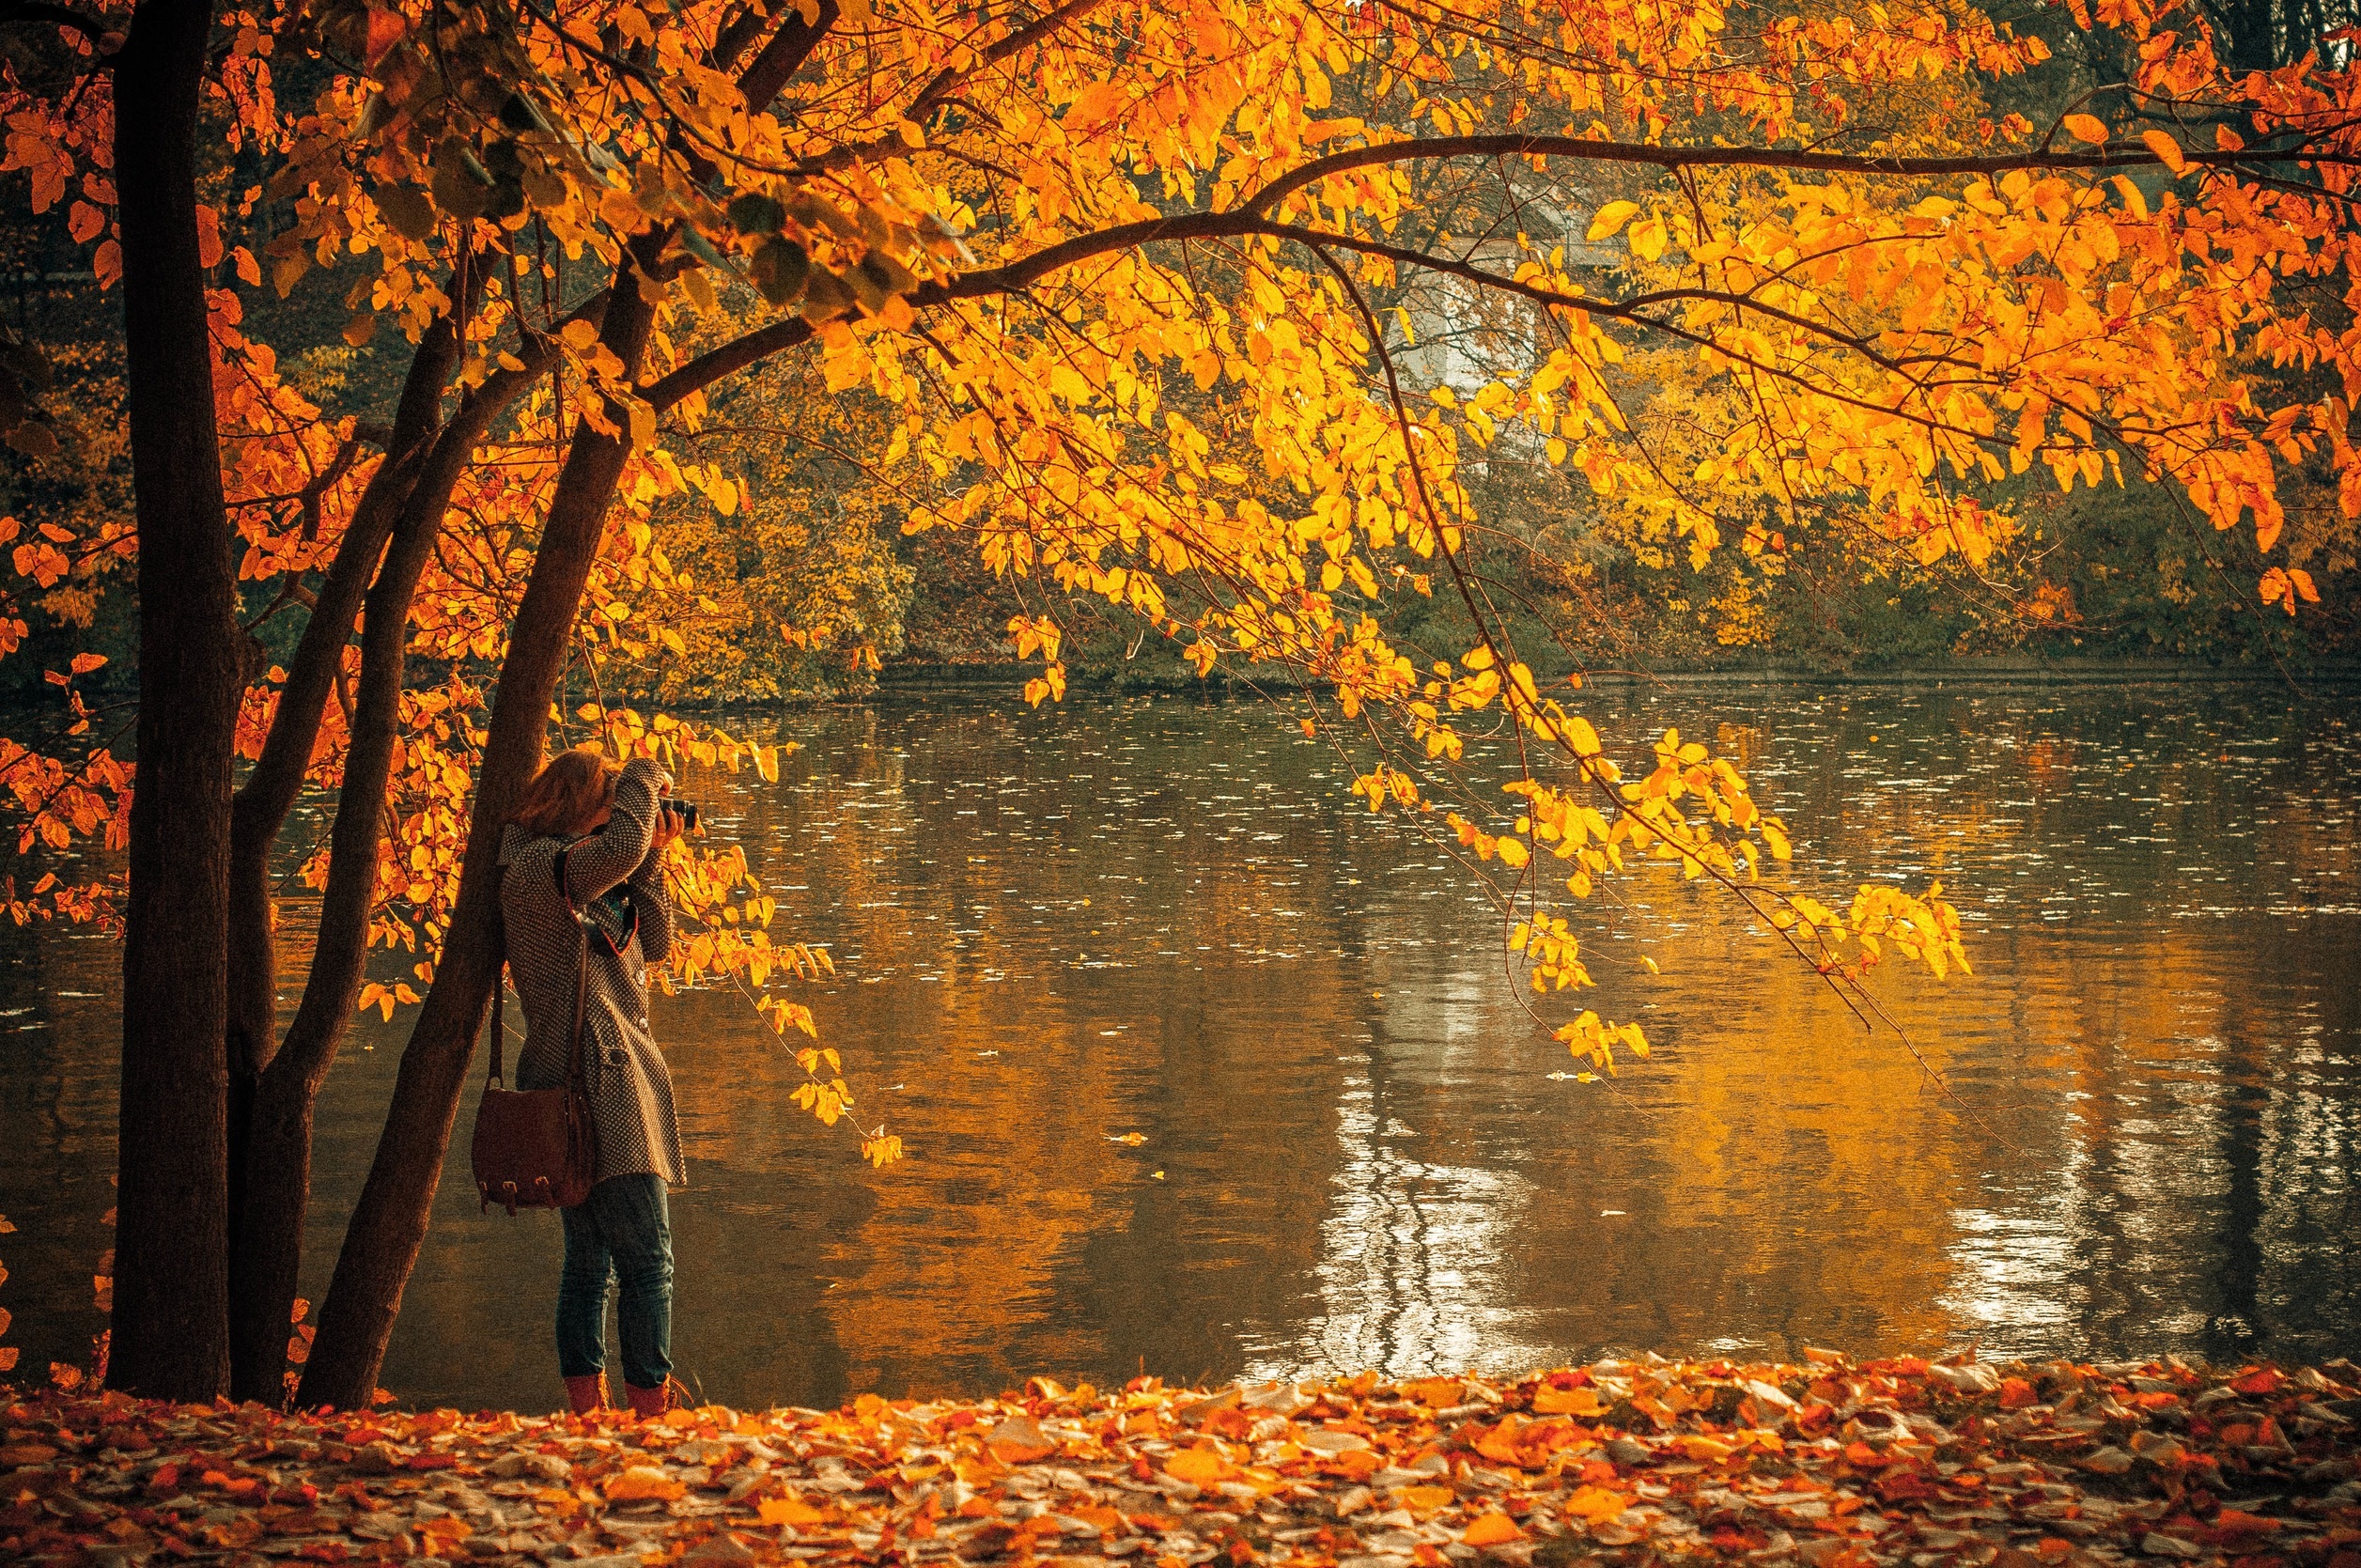 Autumn pond with the photographer